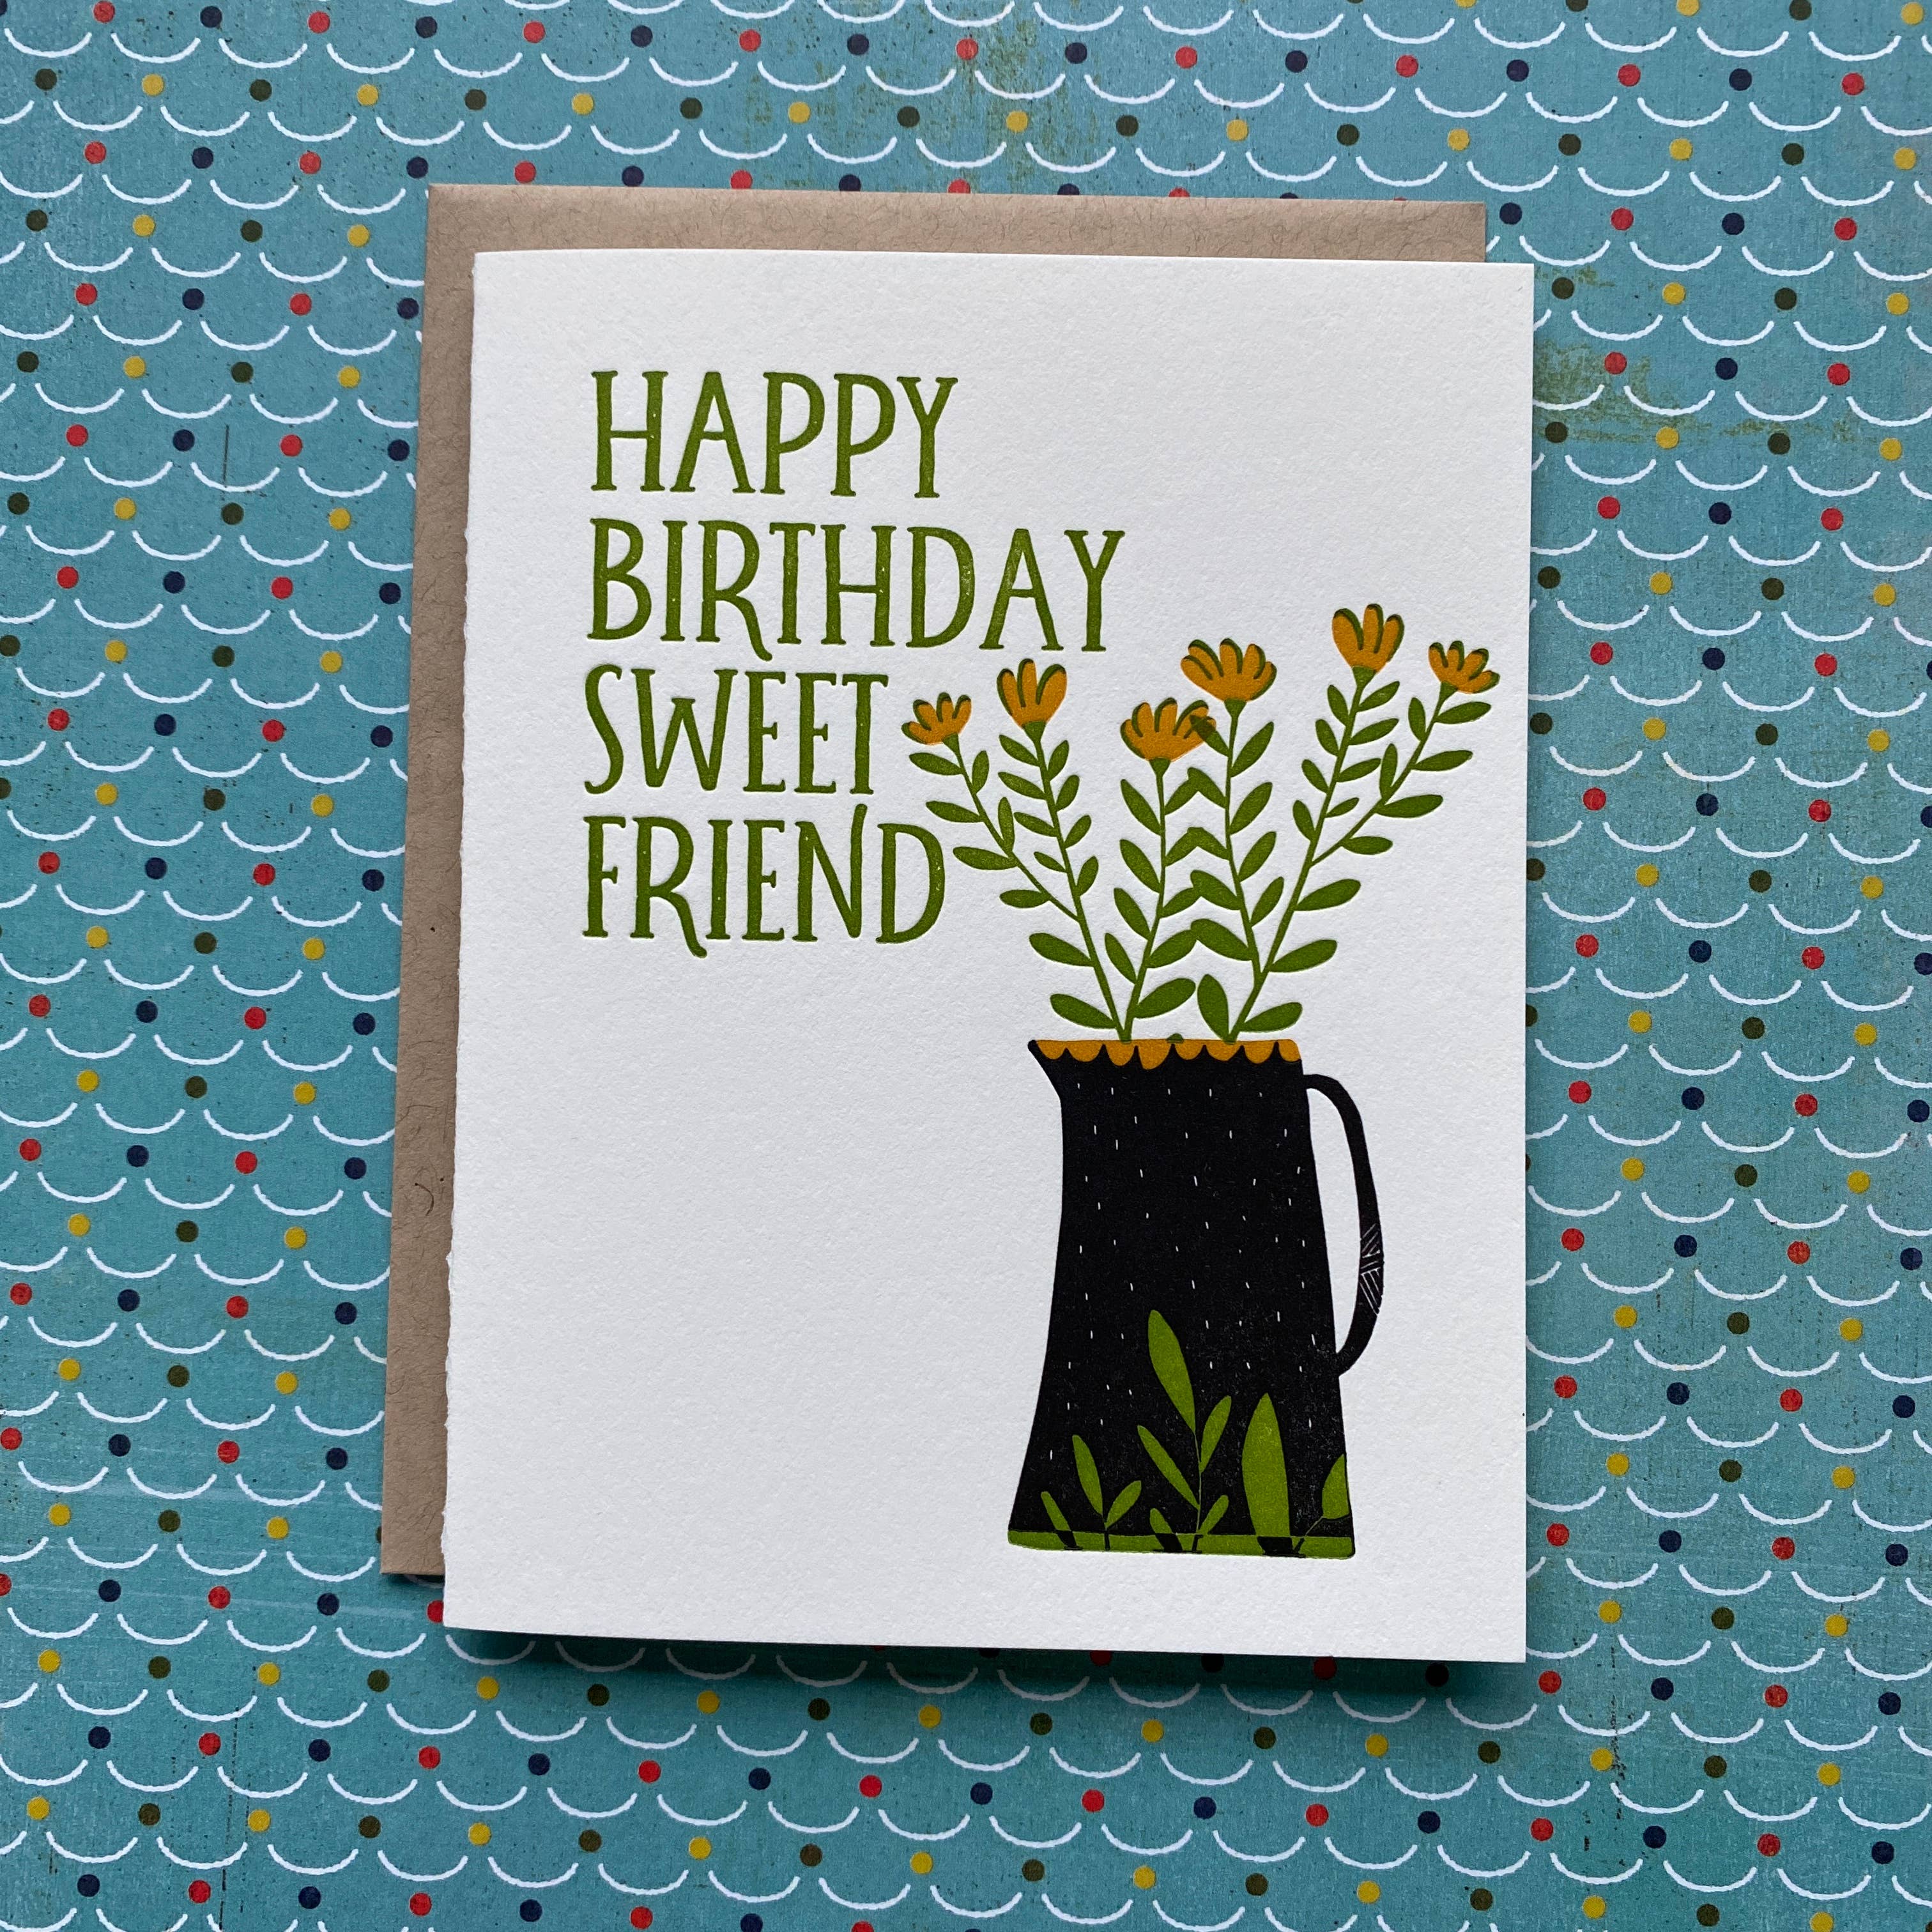 Happy Birthday Sweet Friend Blank Card